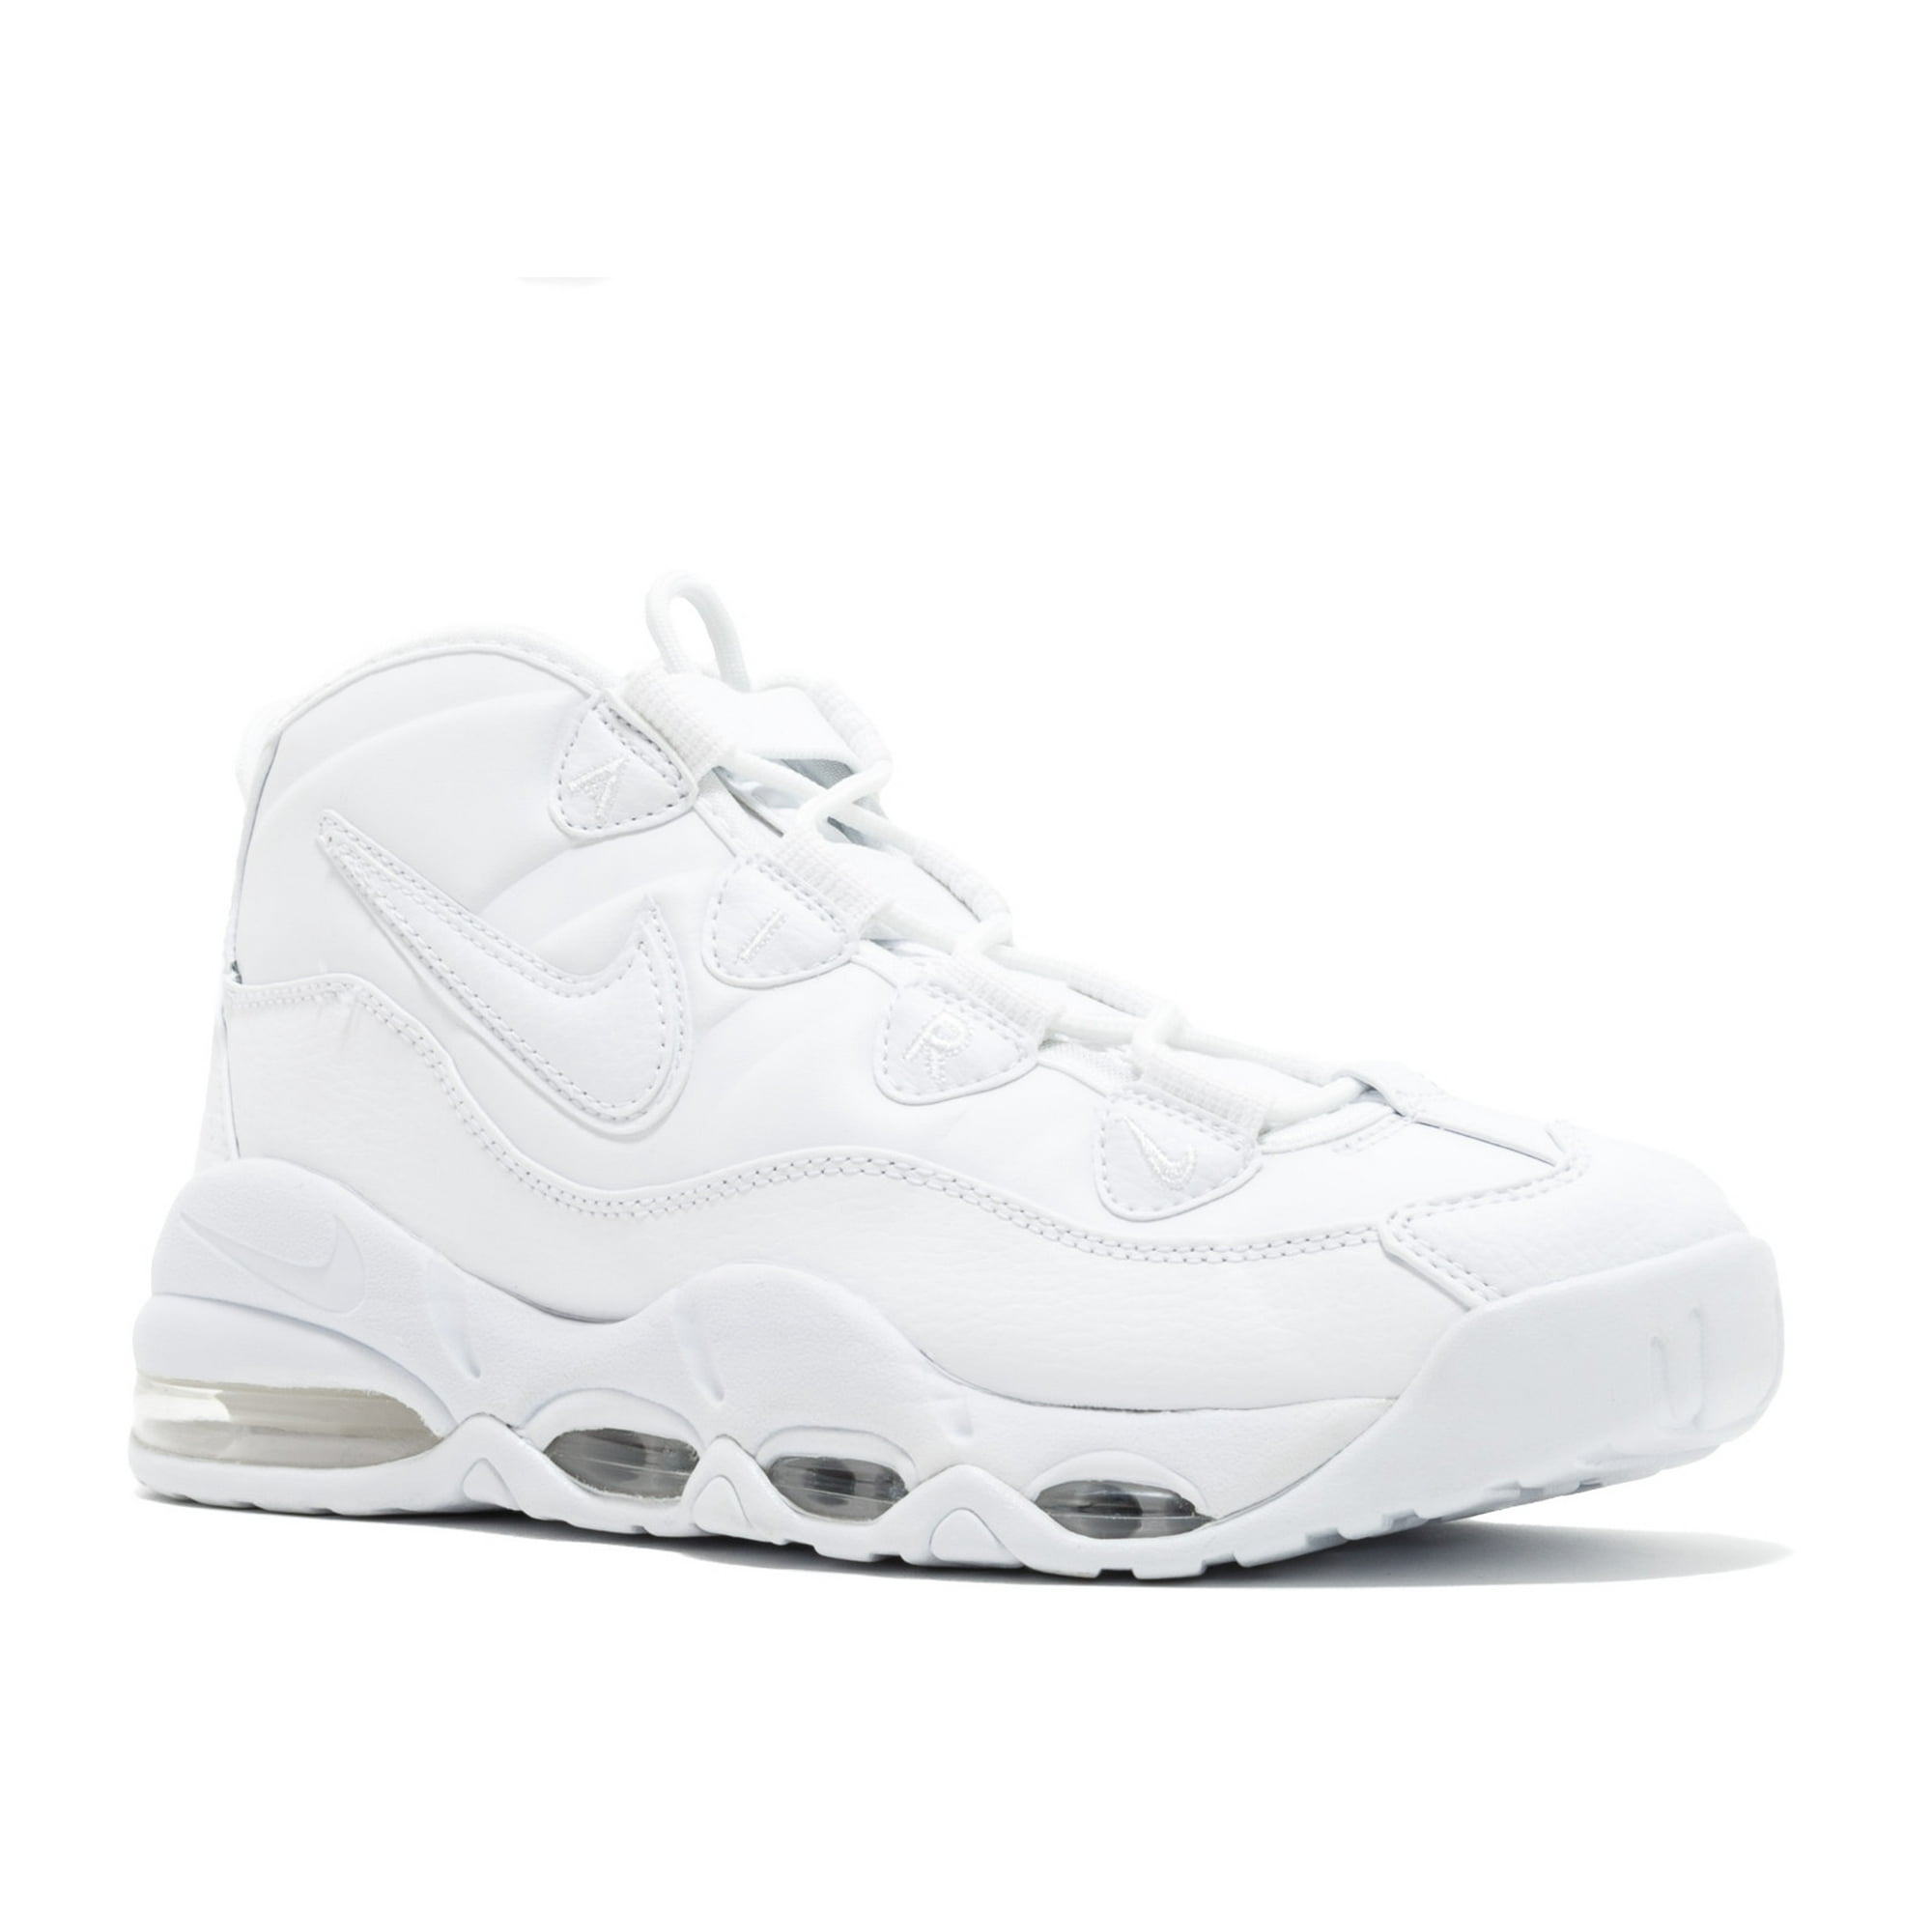 Nike - Men - Air Uptempo 95 White' - 922935-100 - Size 9.5 | Walmart Canada